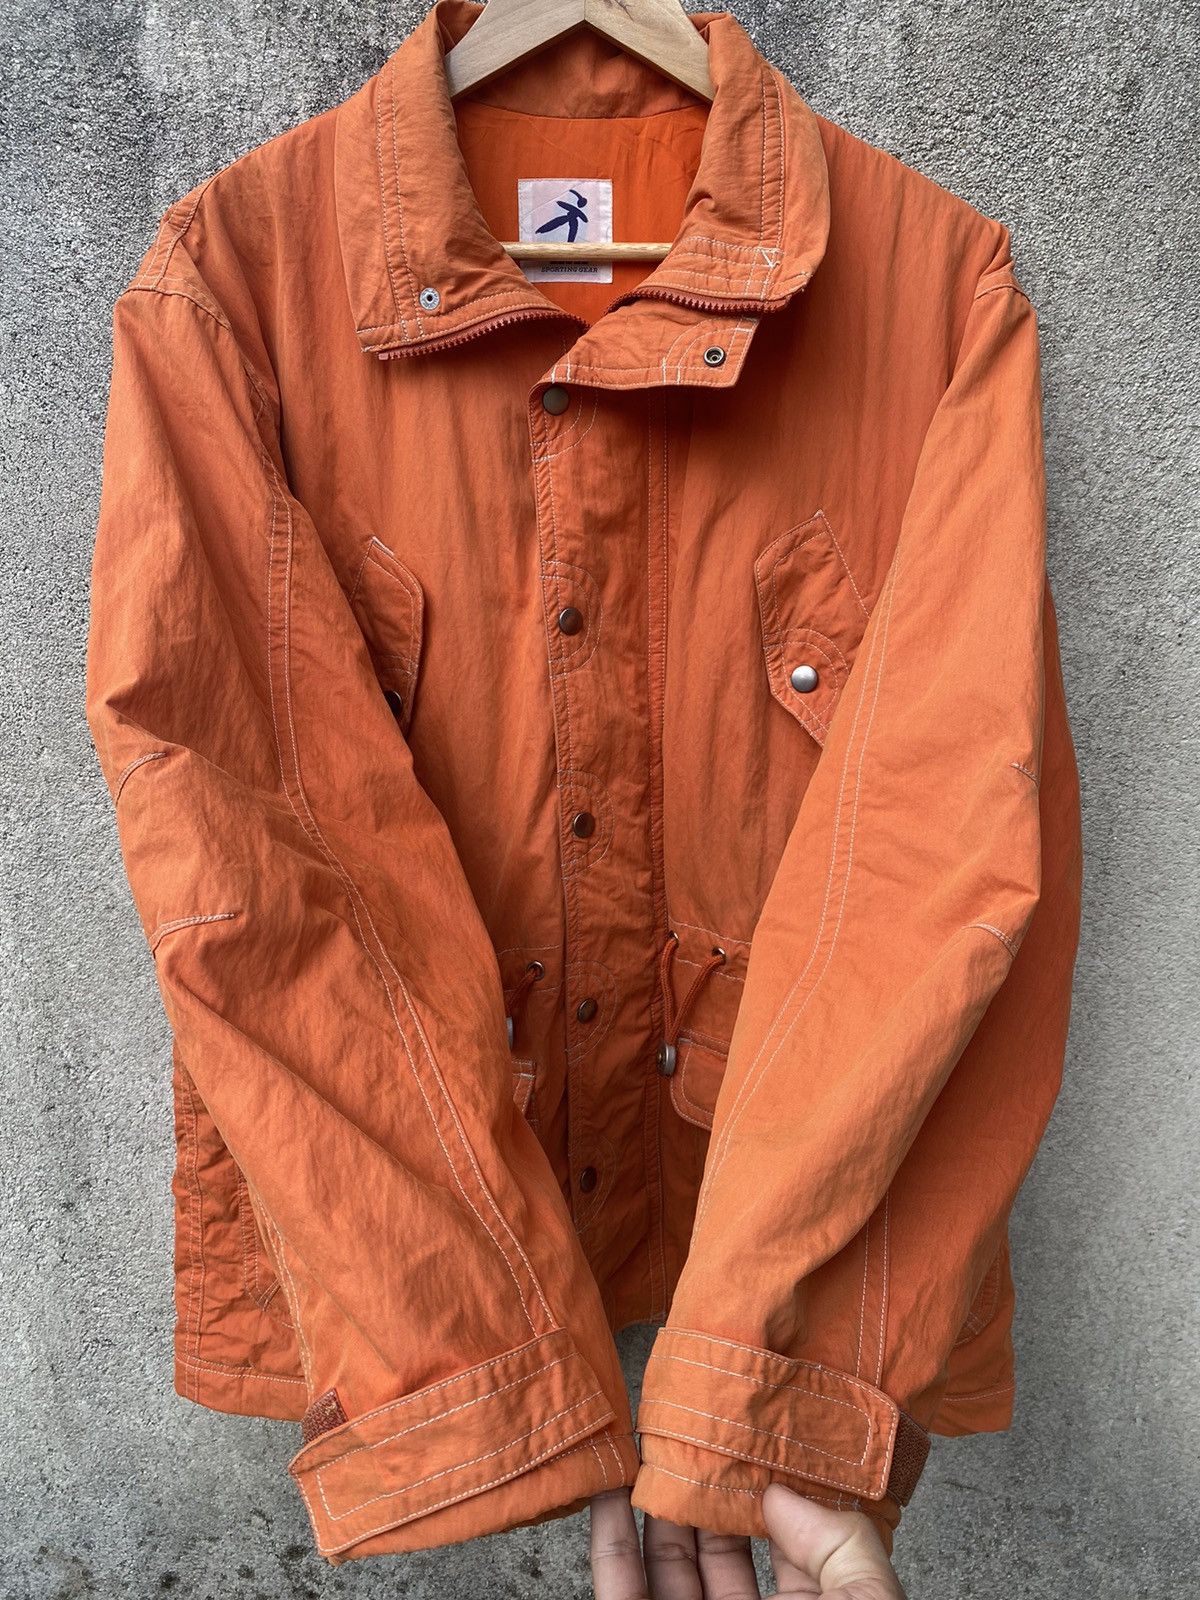 Issey Miyake - Vintage Hai Sporting Gear Parka Jacket Orange Colour - 7